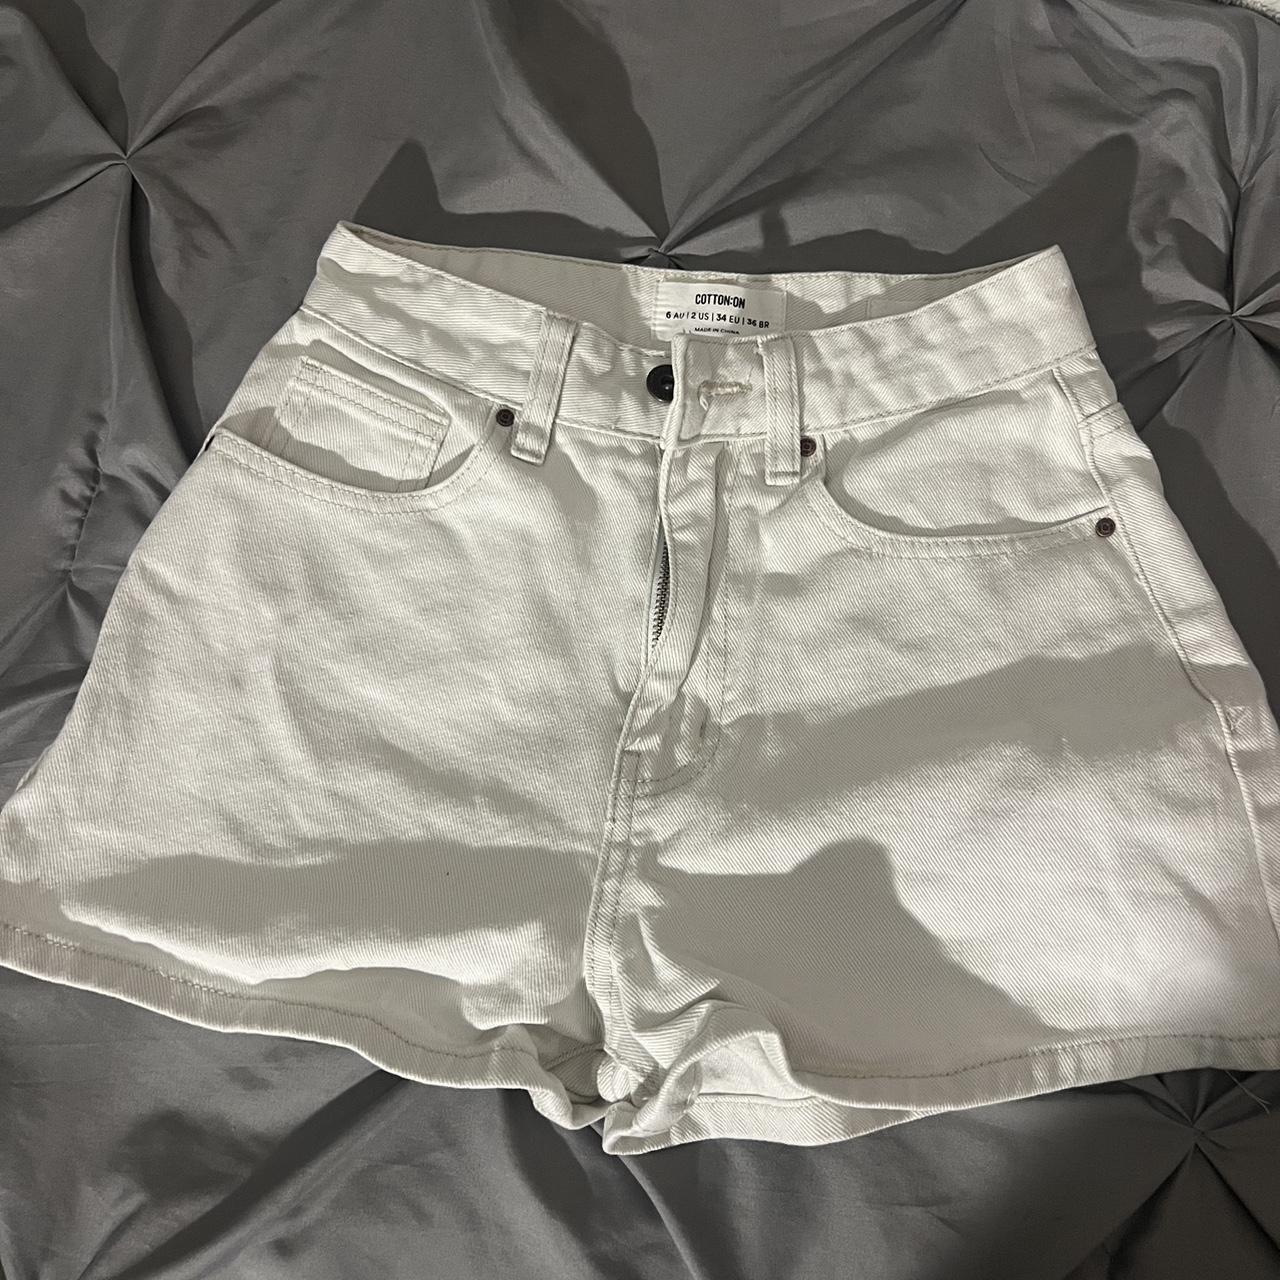 Quince linen shorts in Drift Wood (beige). Size S, - Depop